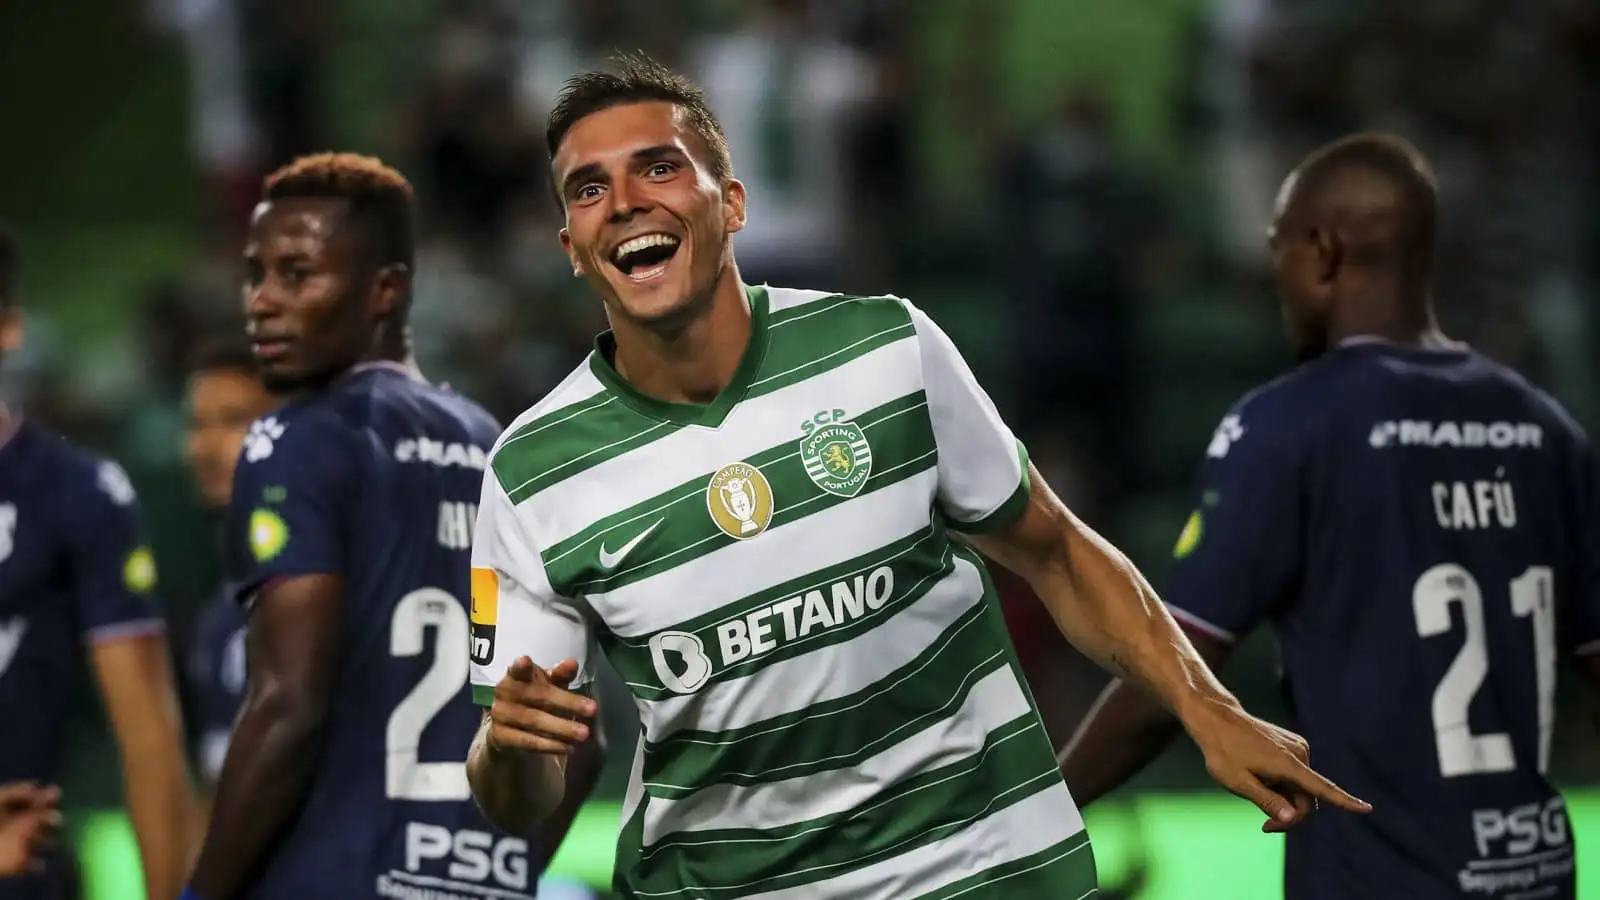 Sporting Lisbon midfielder Joao Palhinha